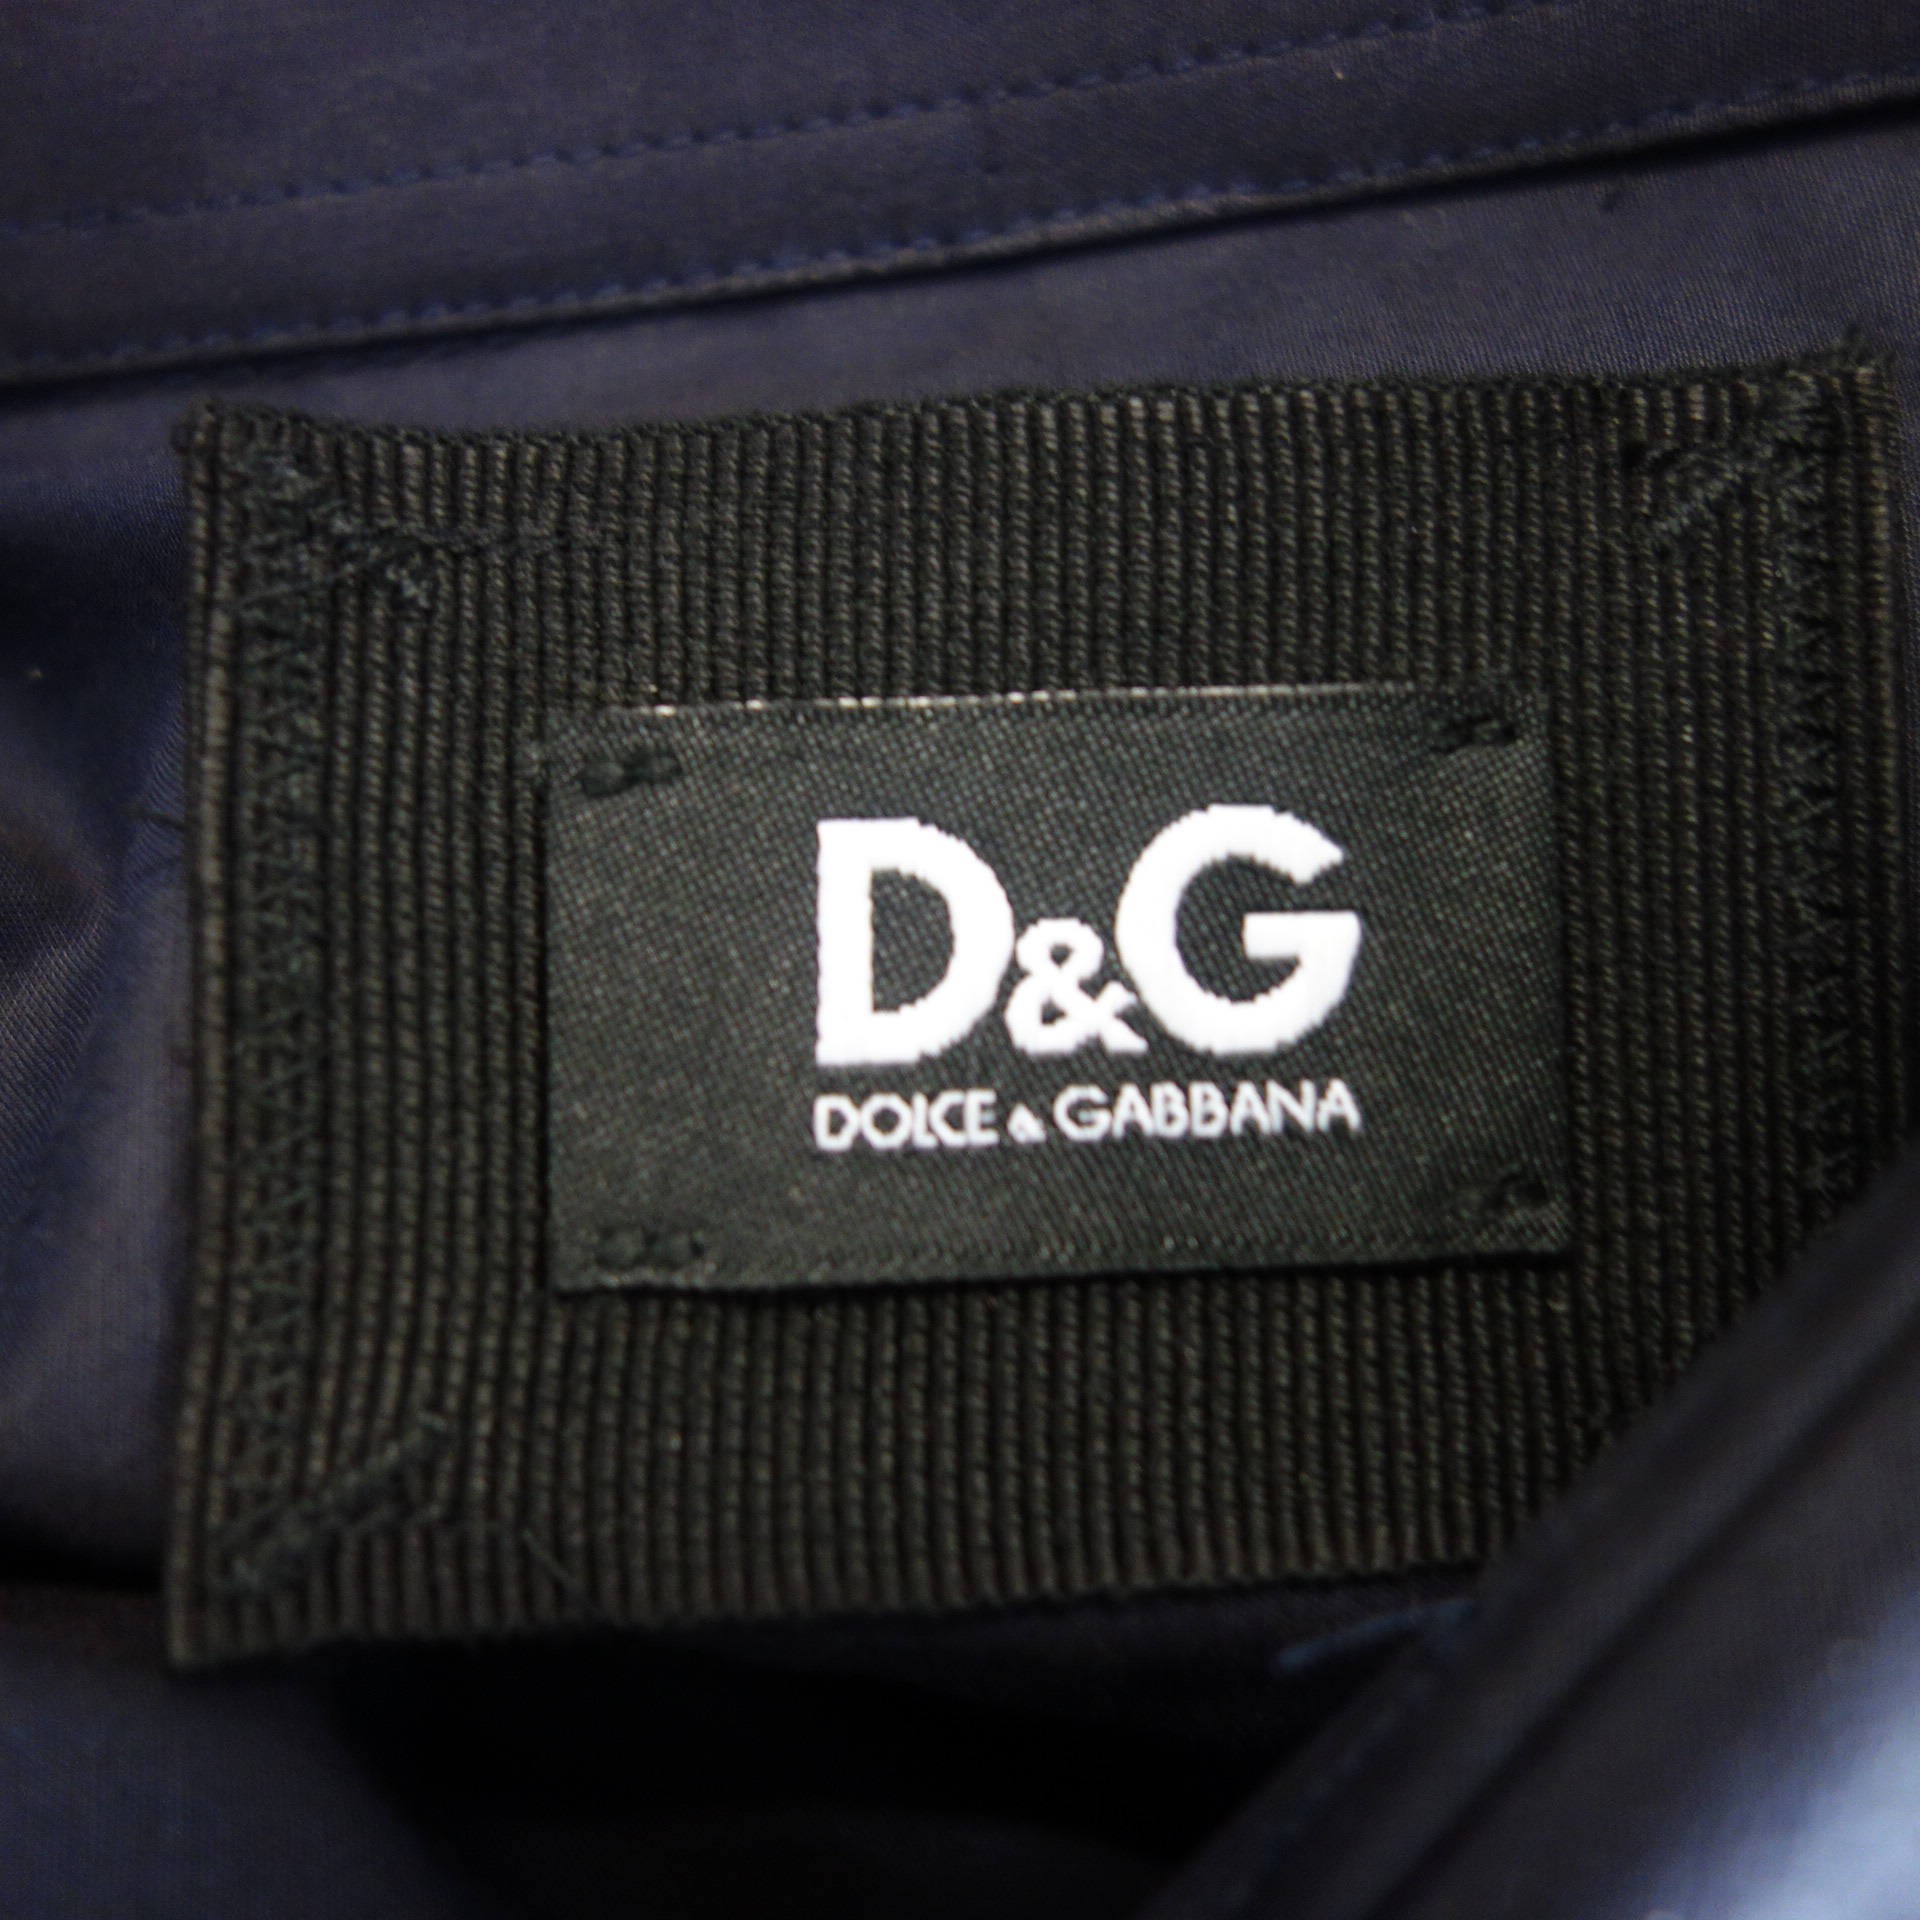 D&G DOLCE & GABBANA Damen Hemd Bluse Tunika Dunkelblau IT 48 DE 42 Baumwolle